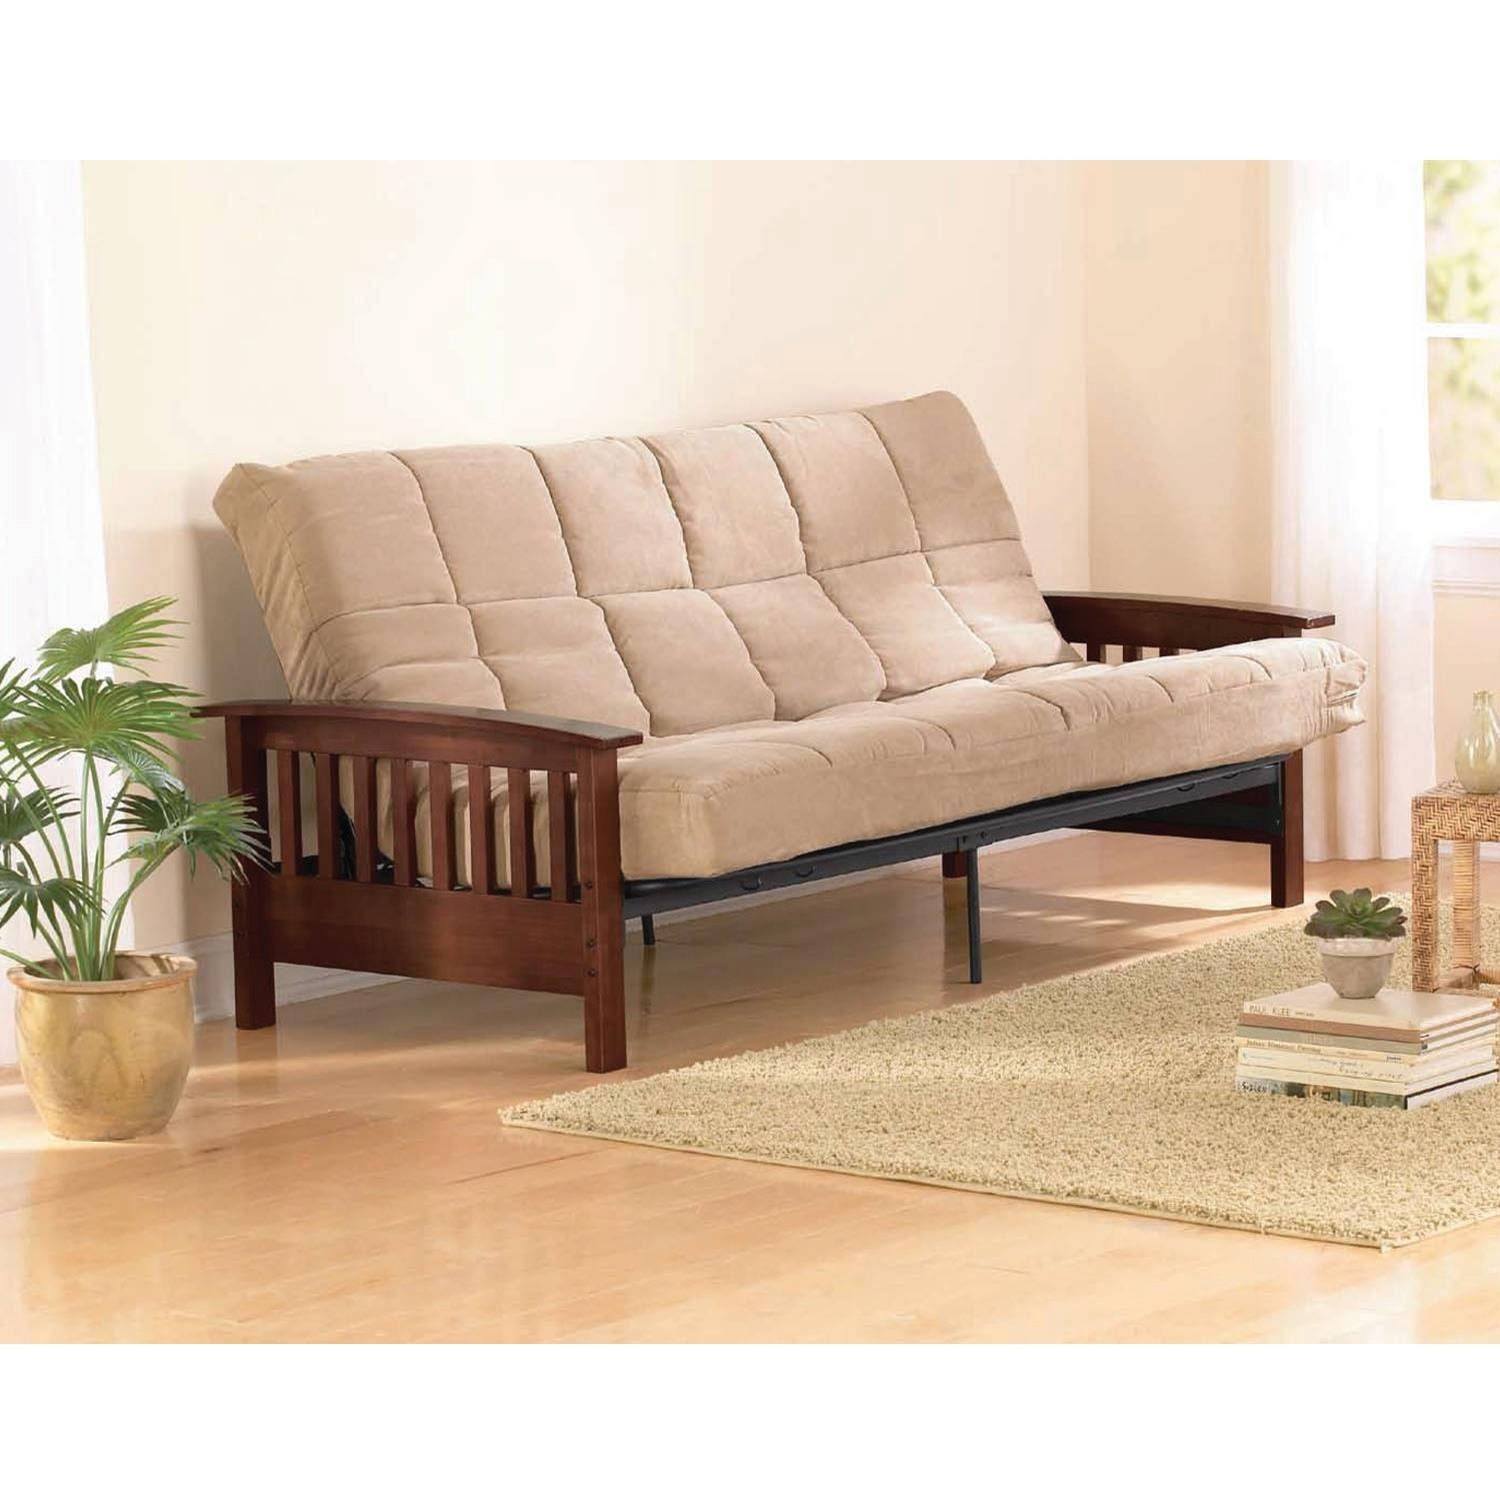 Belleze Convertible Futon Folding Sofa Bed Couch Sleep Adjustable Regarding Convertible Futon Sofa Beds (Photo 7 of 15)